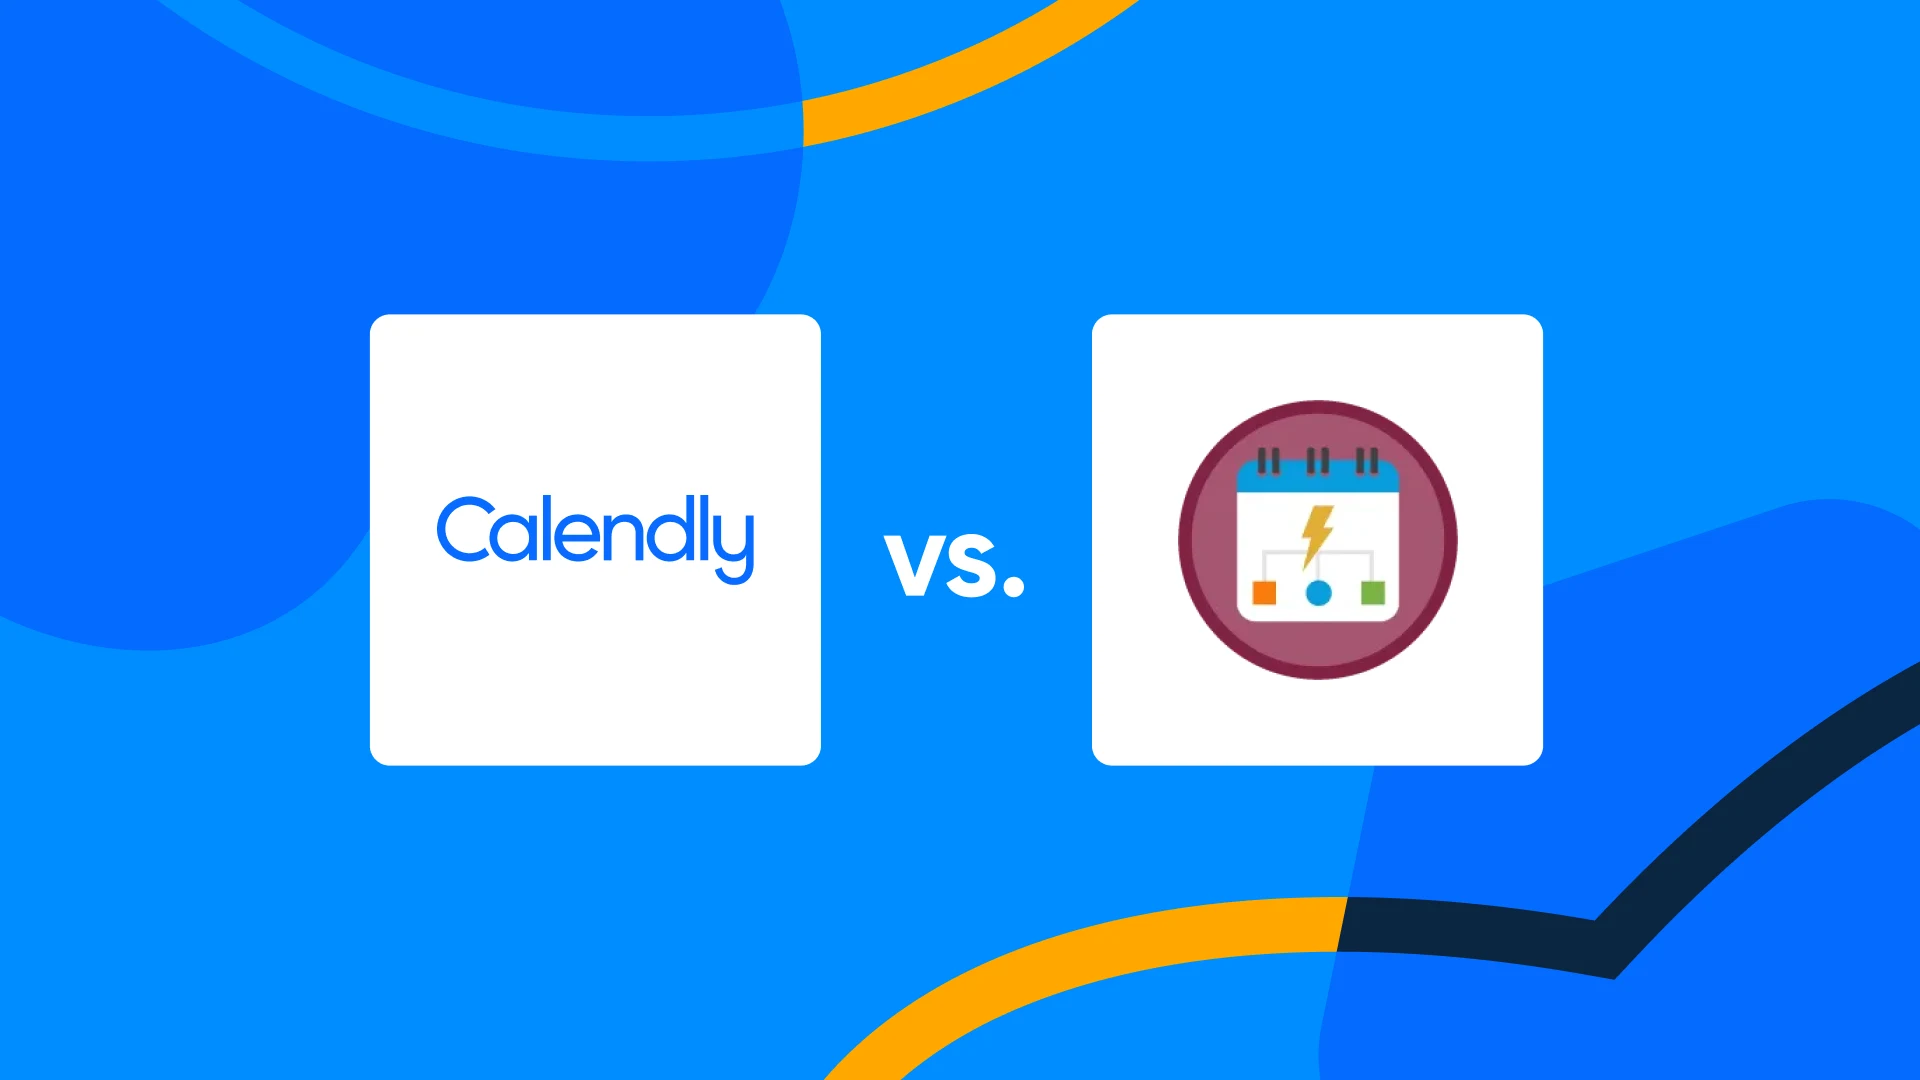 Salesforce Scheduler vs Calendly vs hero + OG